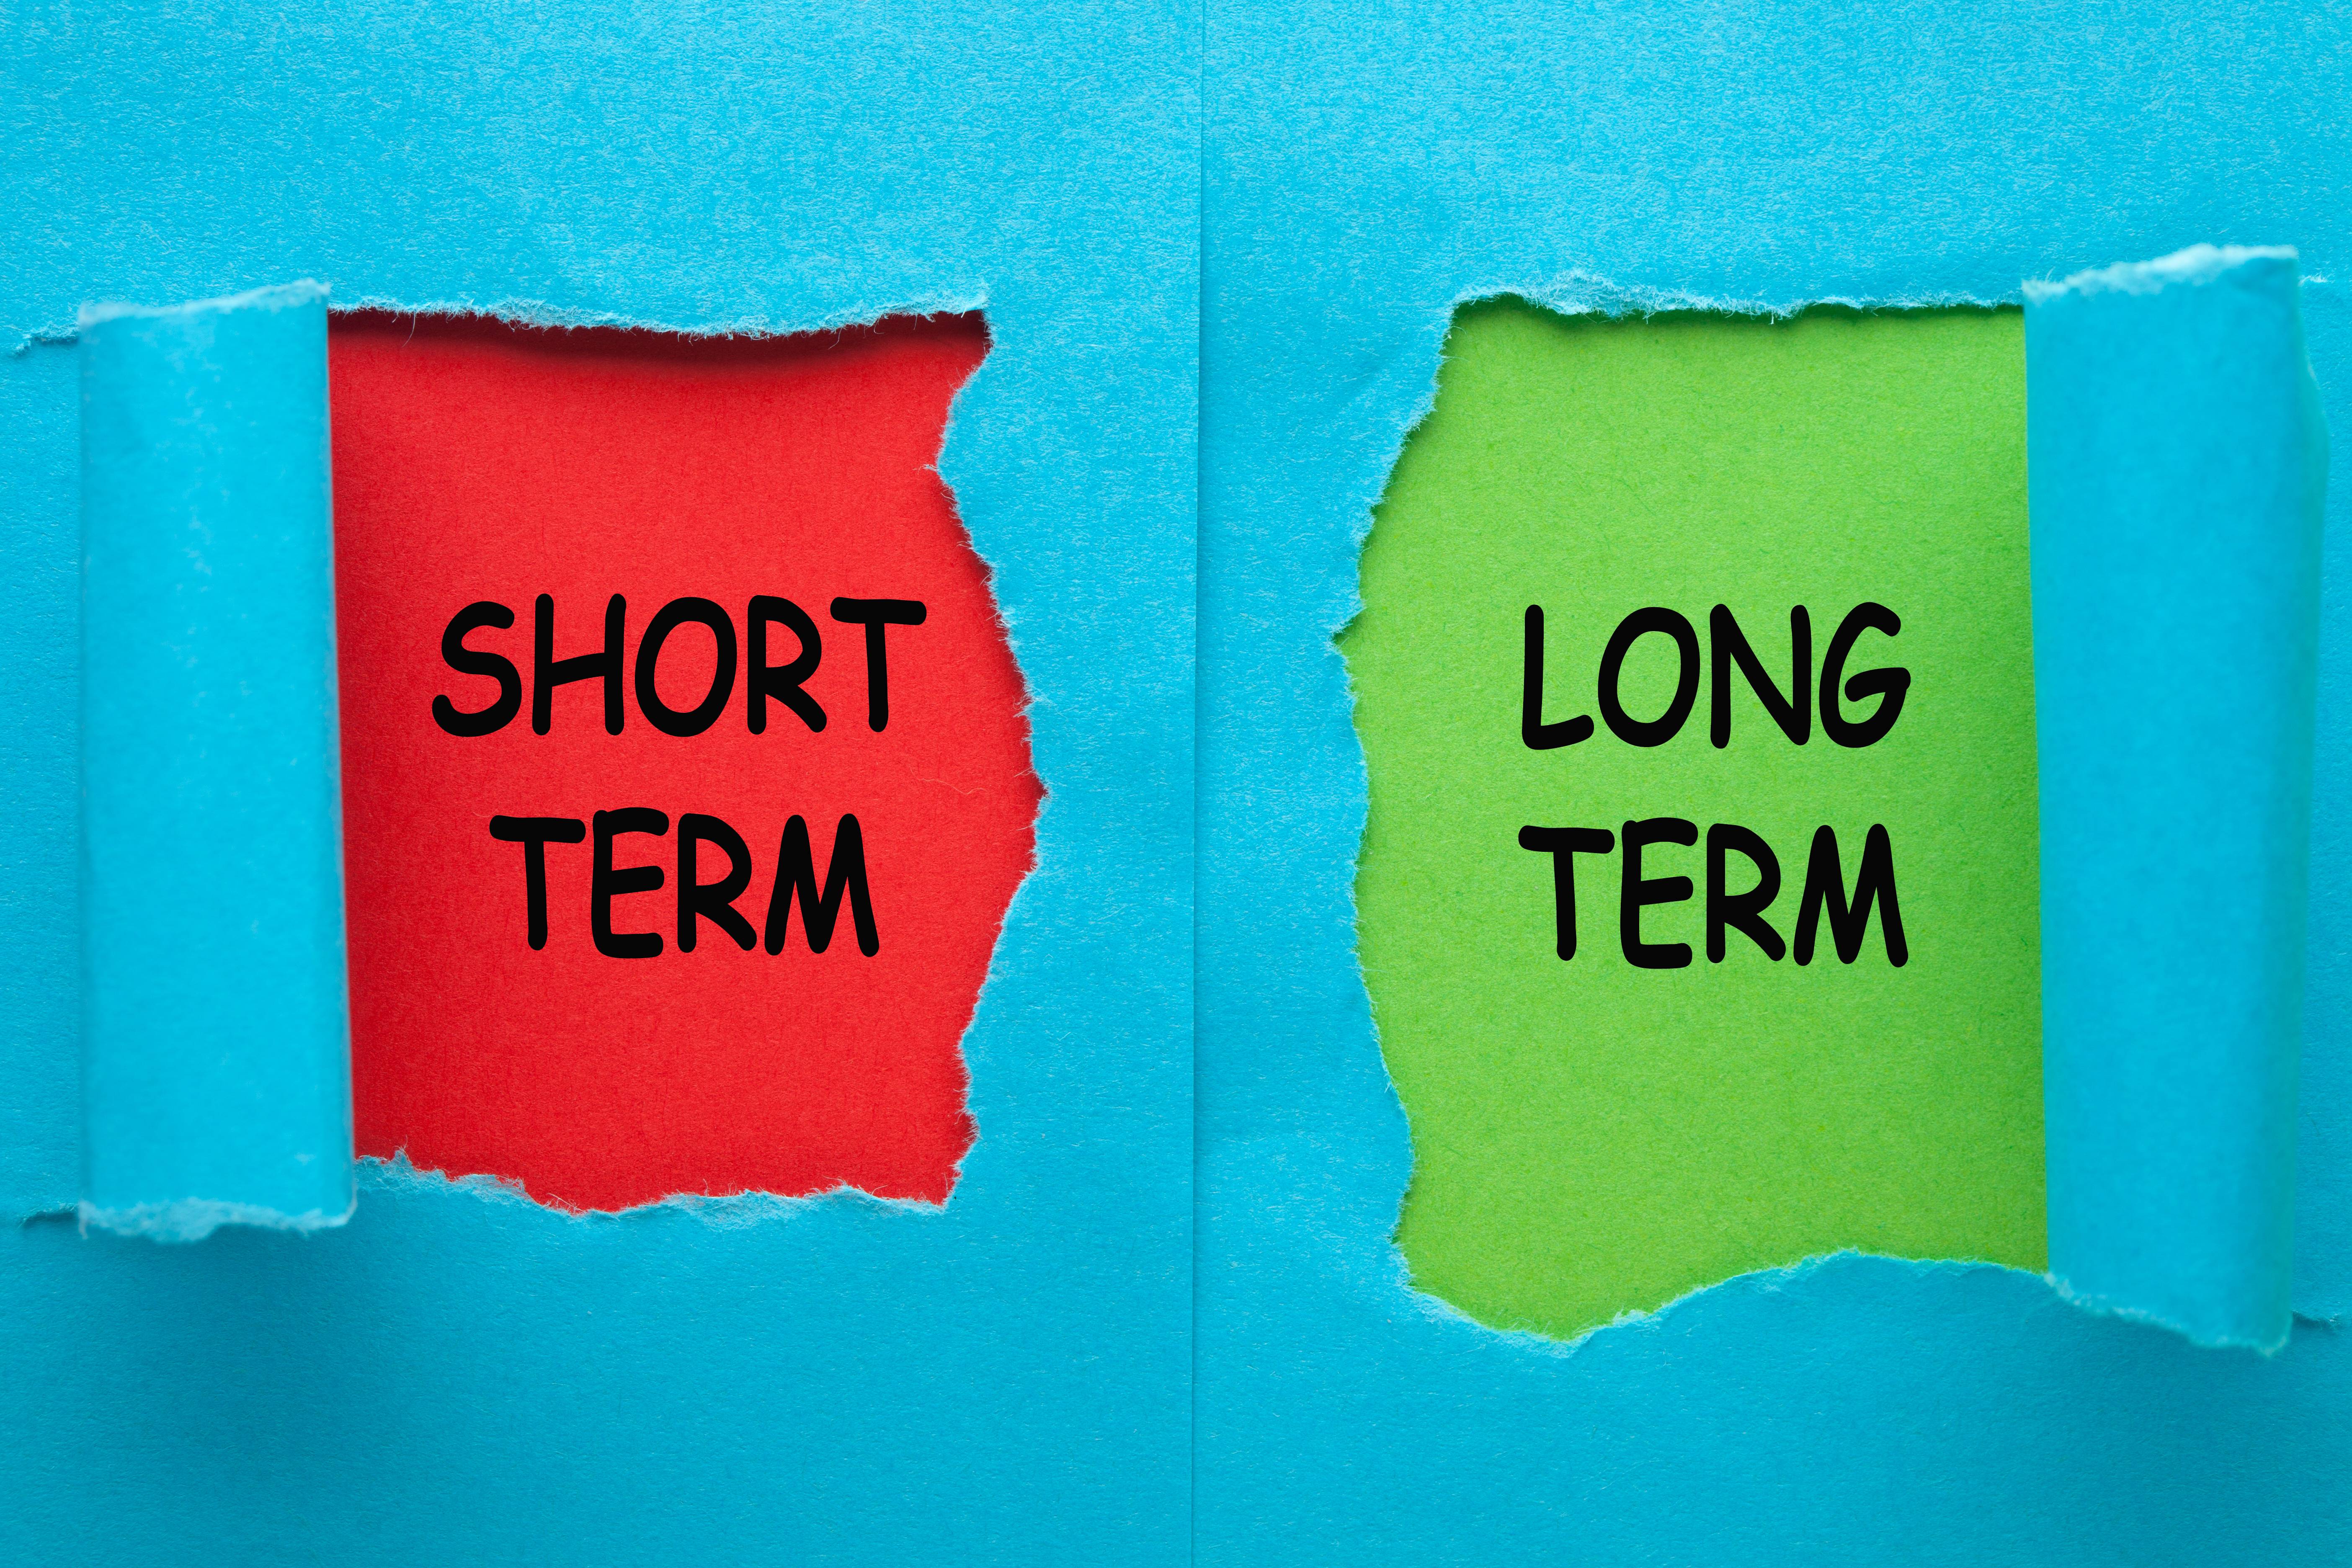 Short term and long term cutouts